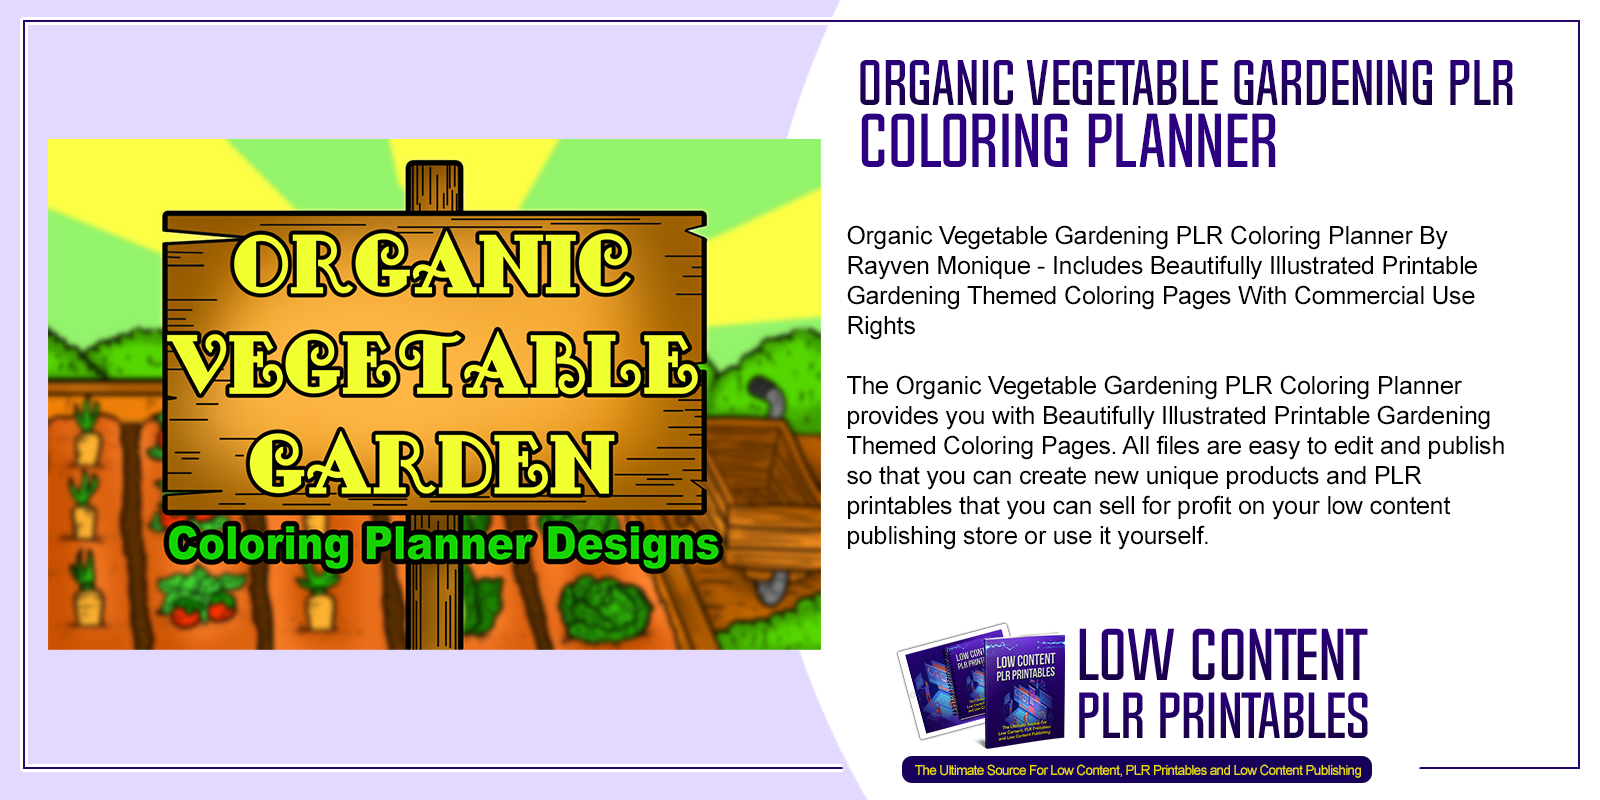 Organic Vegetable Gardening PLR Coloring Planner